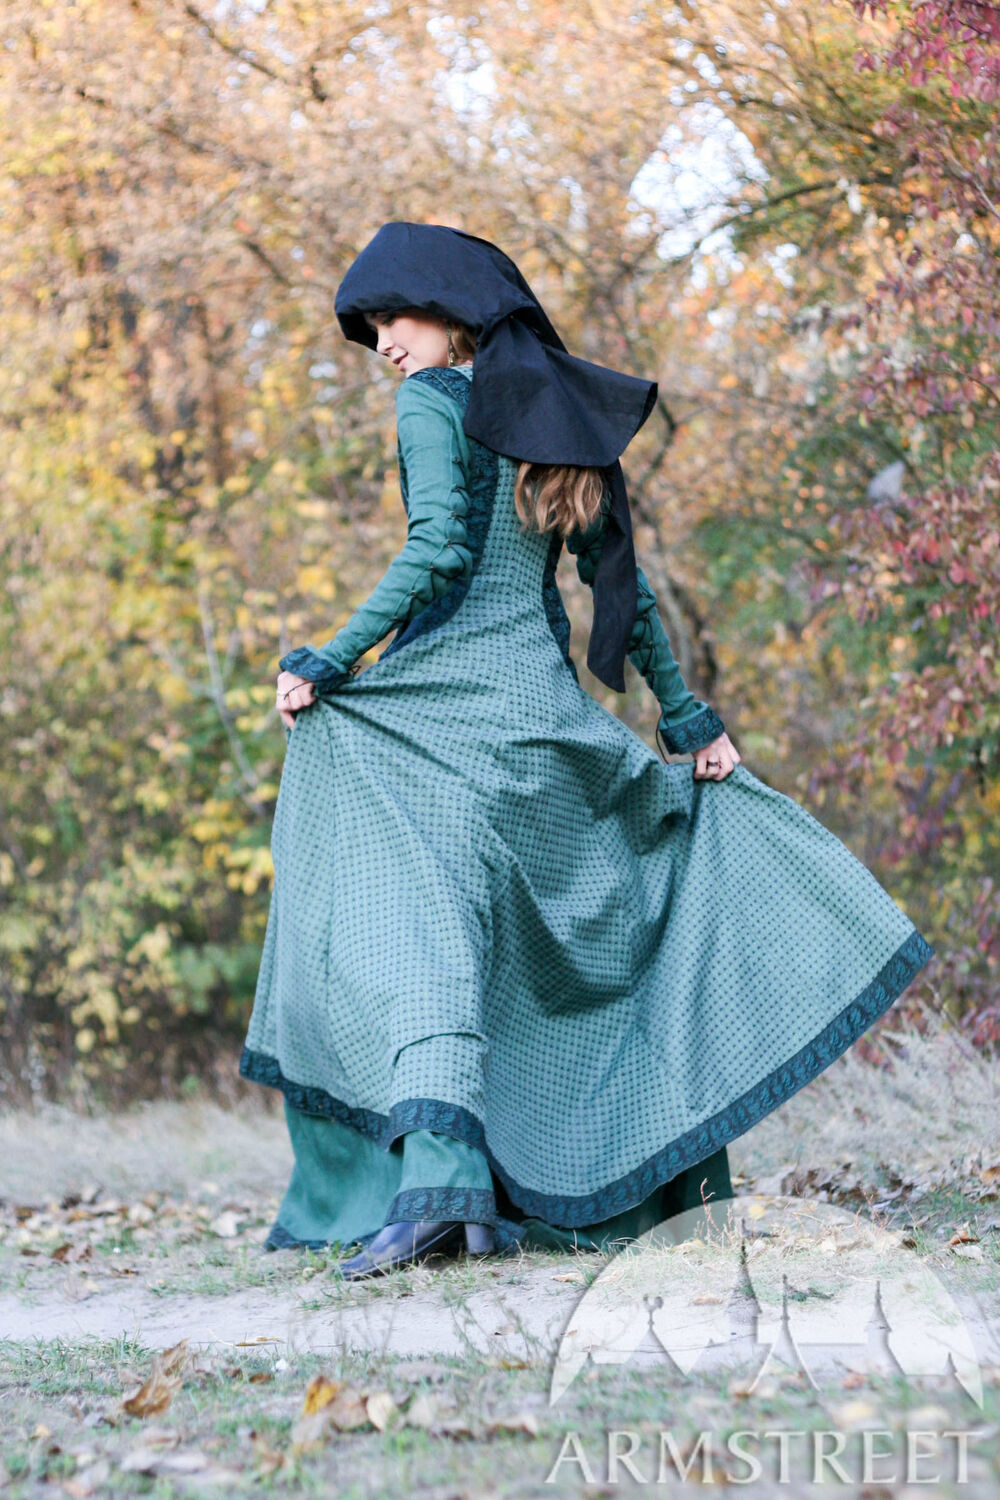 Medieval renaissance dress, overcoat and chaperone headpiece set “Autumn Princess”